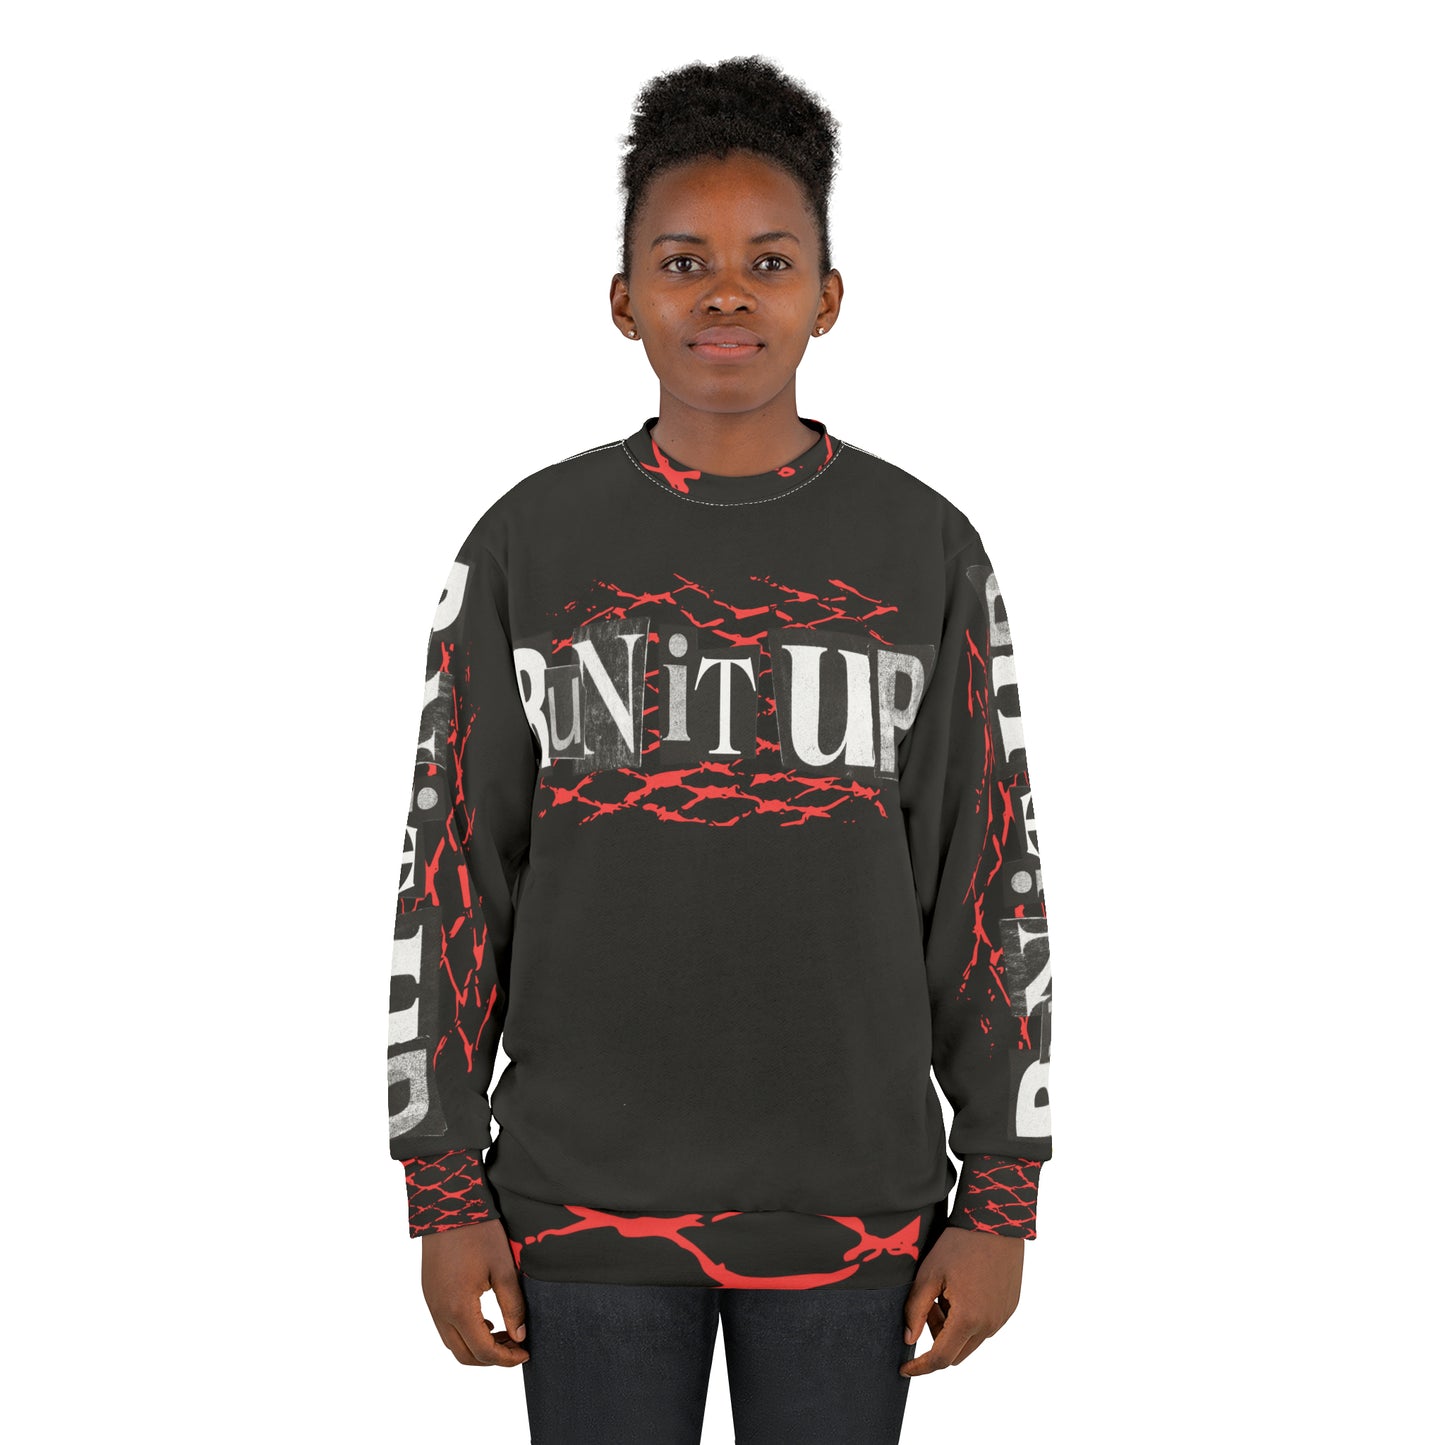 Run It Up 2 (Unisex Sweatshirt)